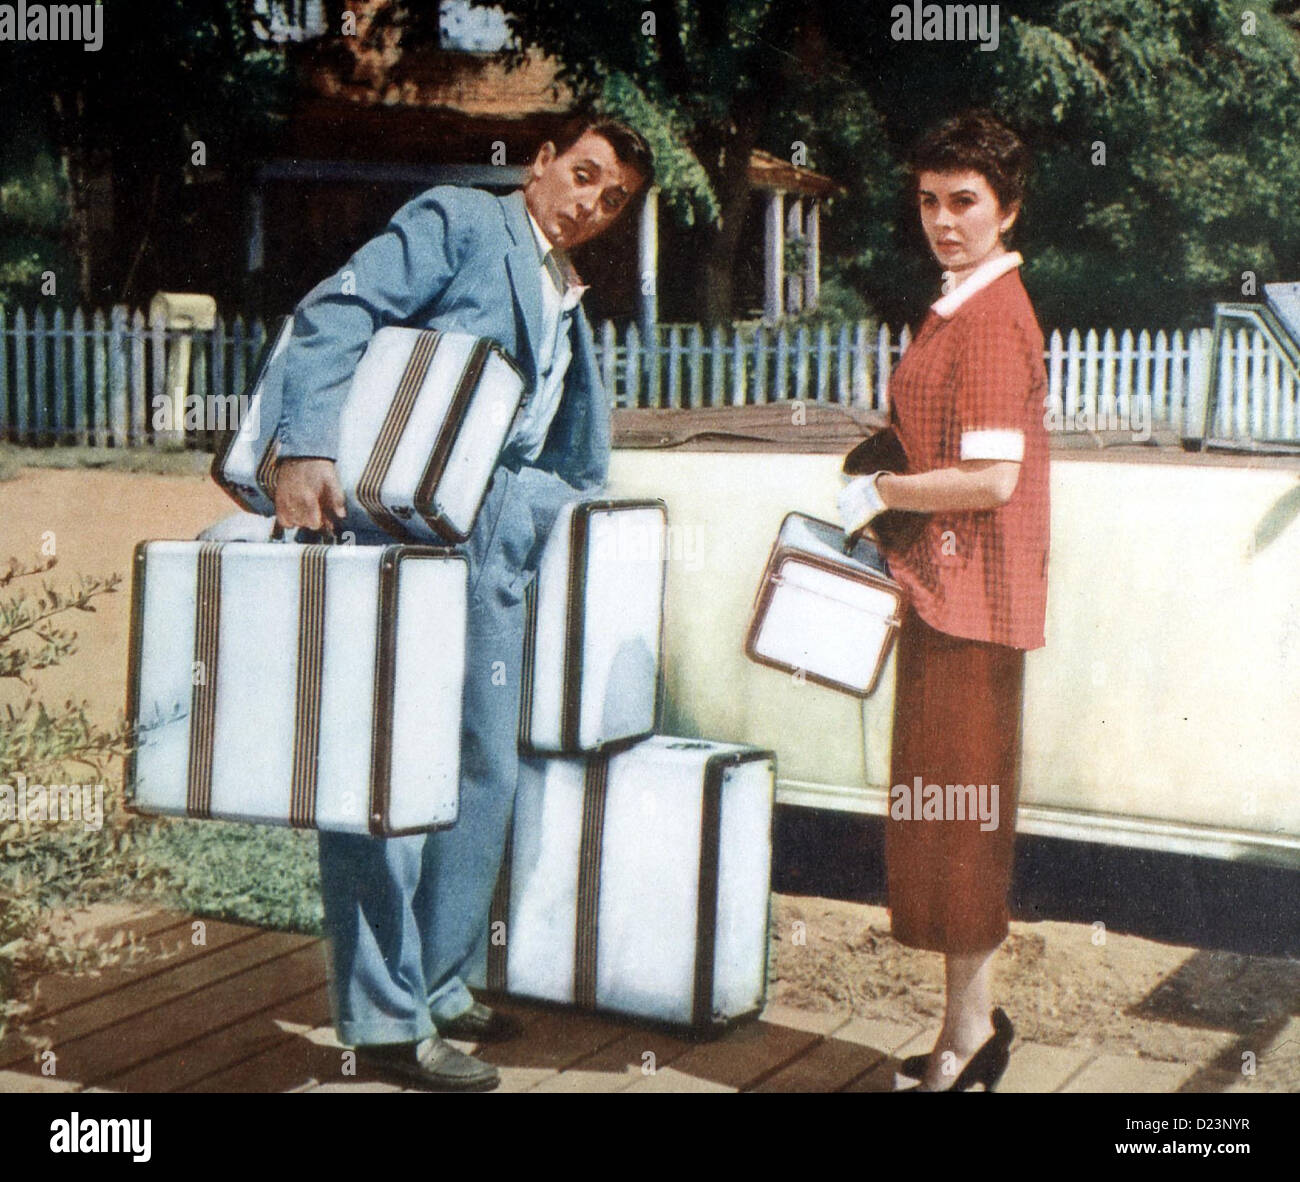 She Couldn't Say No   She Couldn't Say No   Robert Mitchum, Jean Simmons *** Local Caption *** 1954  -- Stock Photo